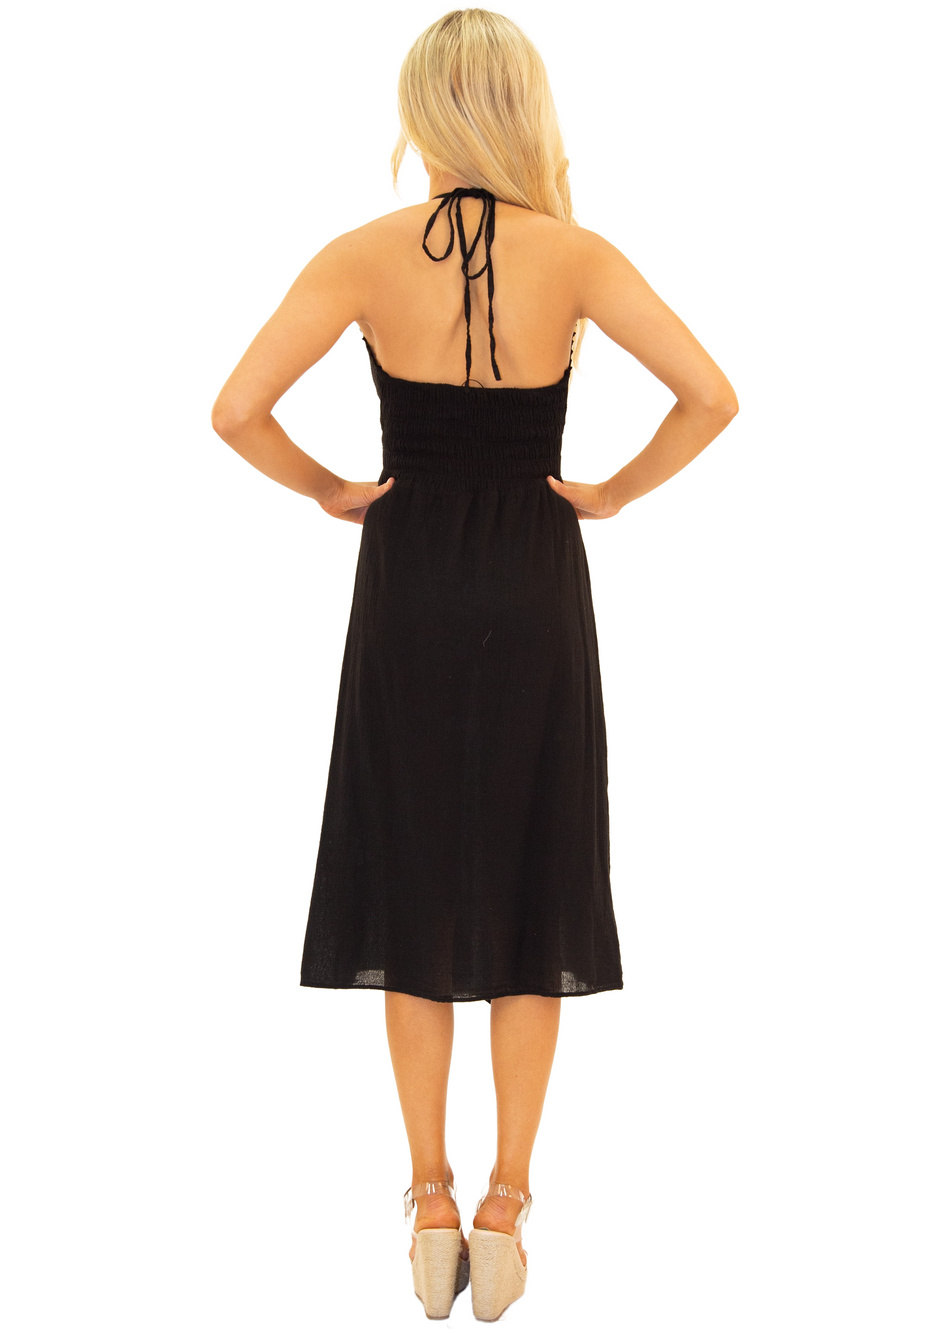 NW1273 - Black Cotton Dress